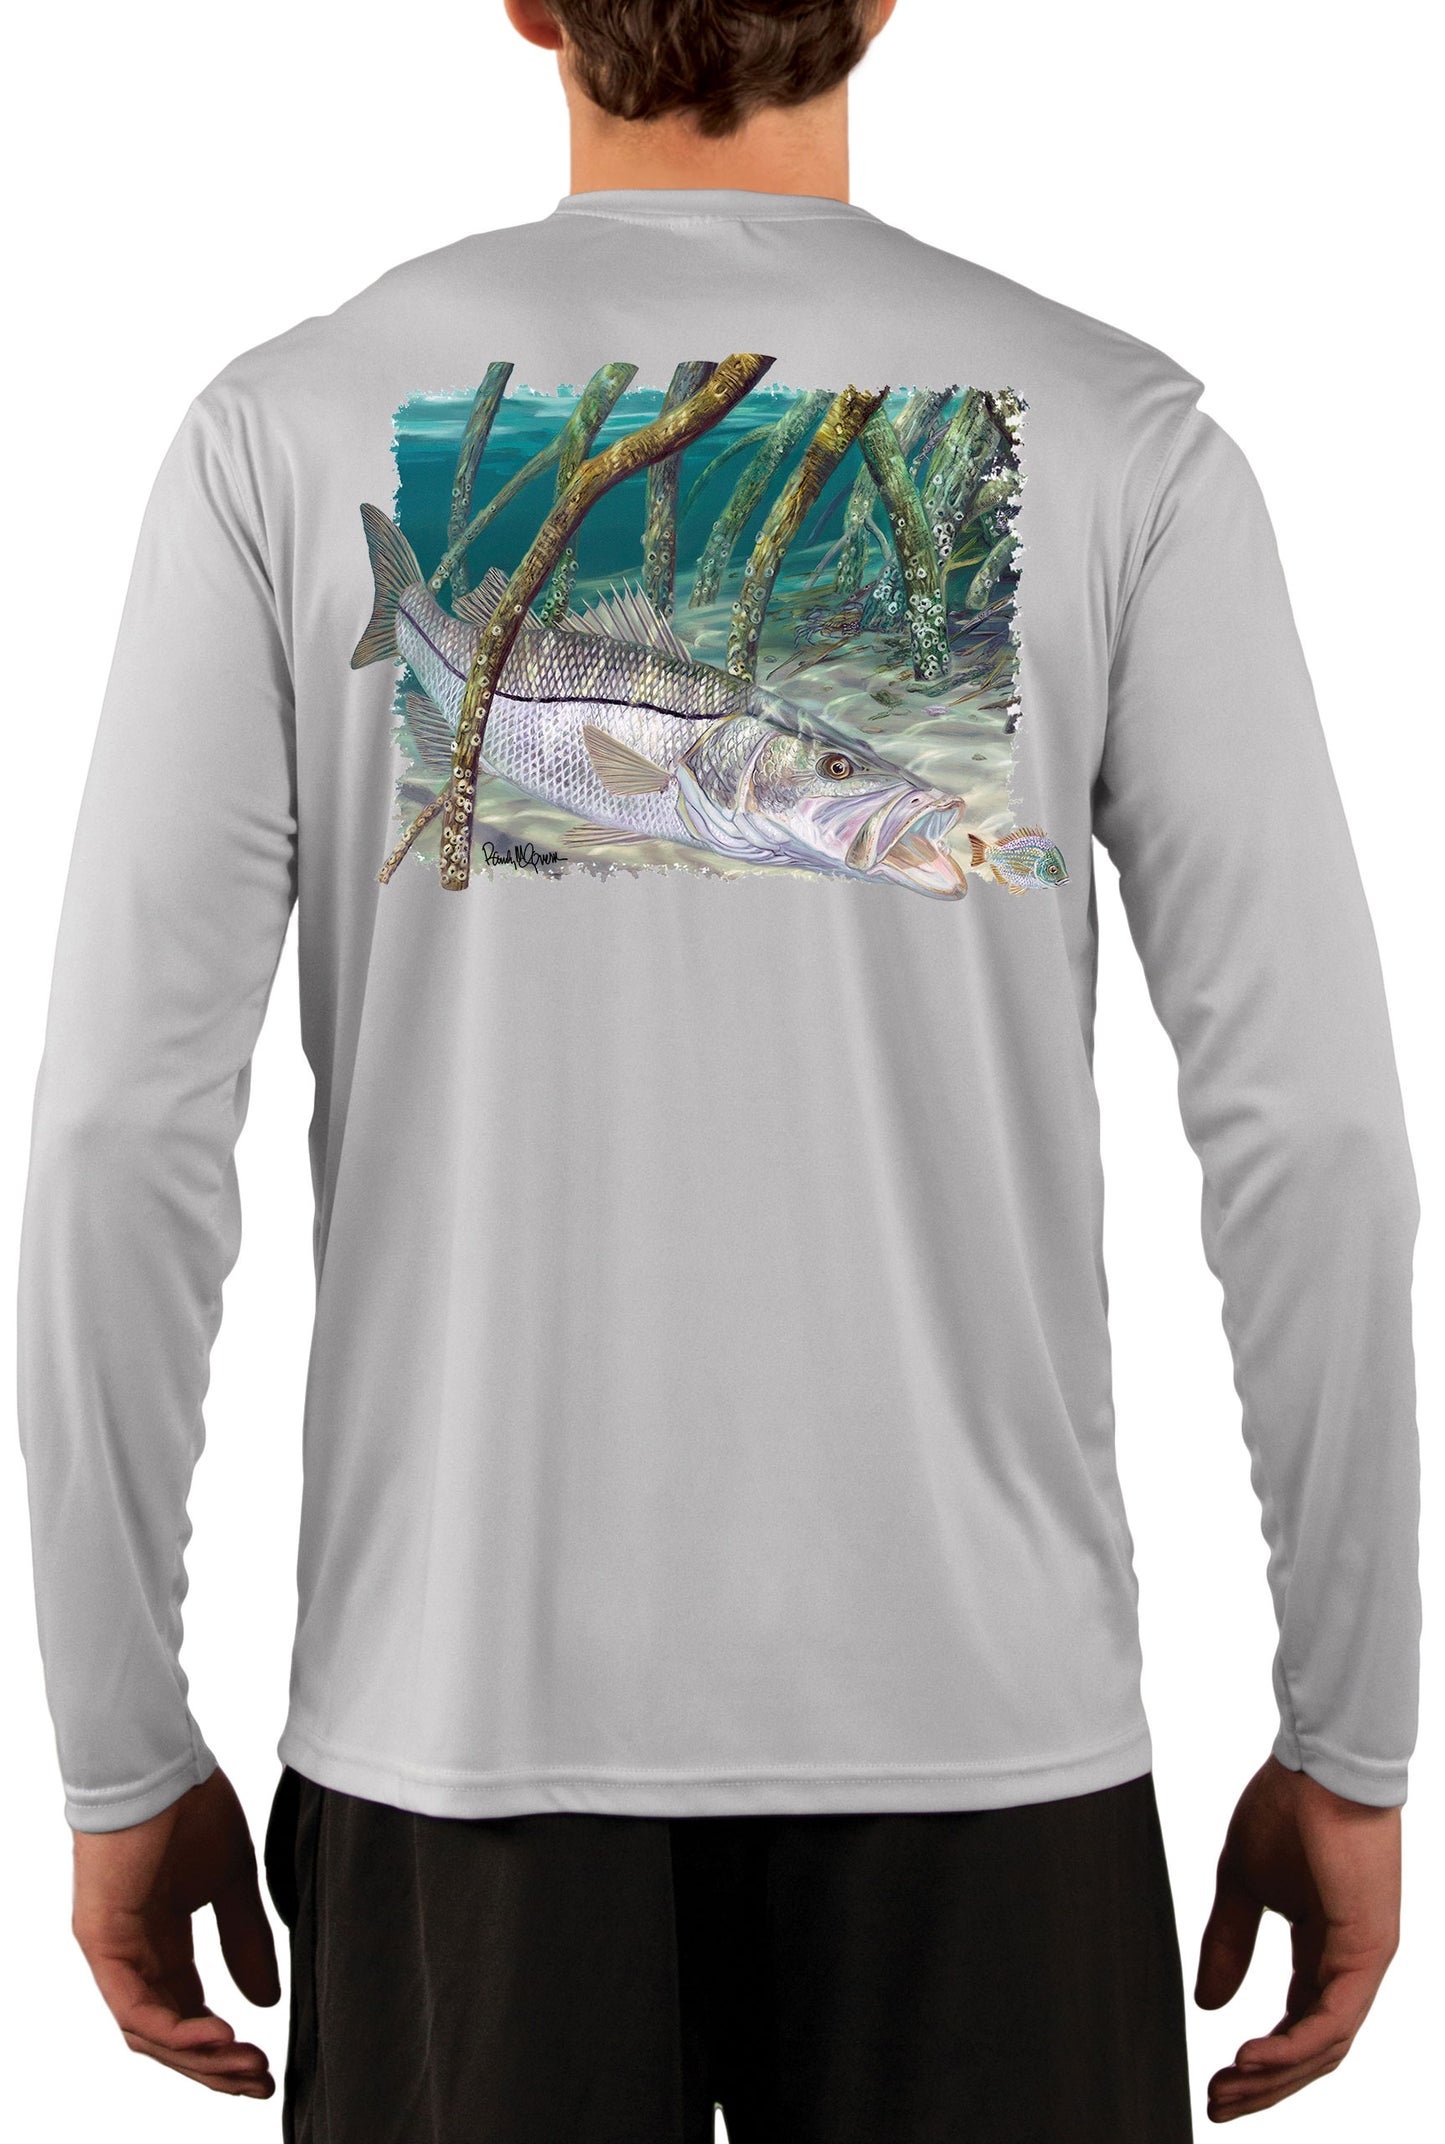 Adult Fishing Shirt - Coastal Creek – Nathan Whippy Griggs